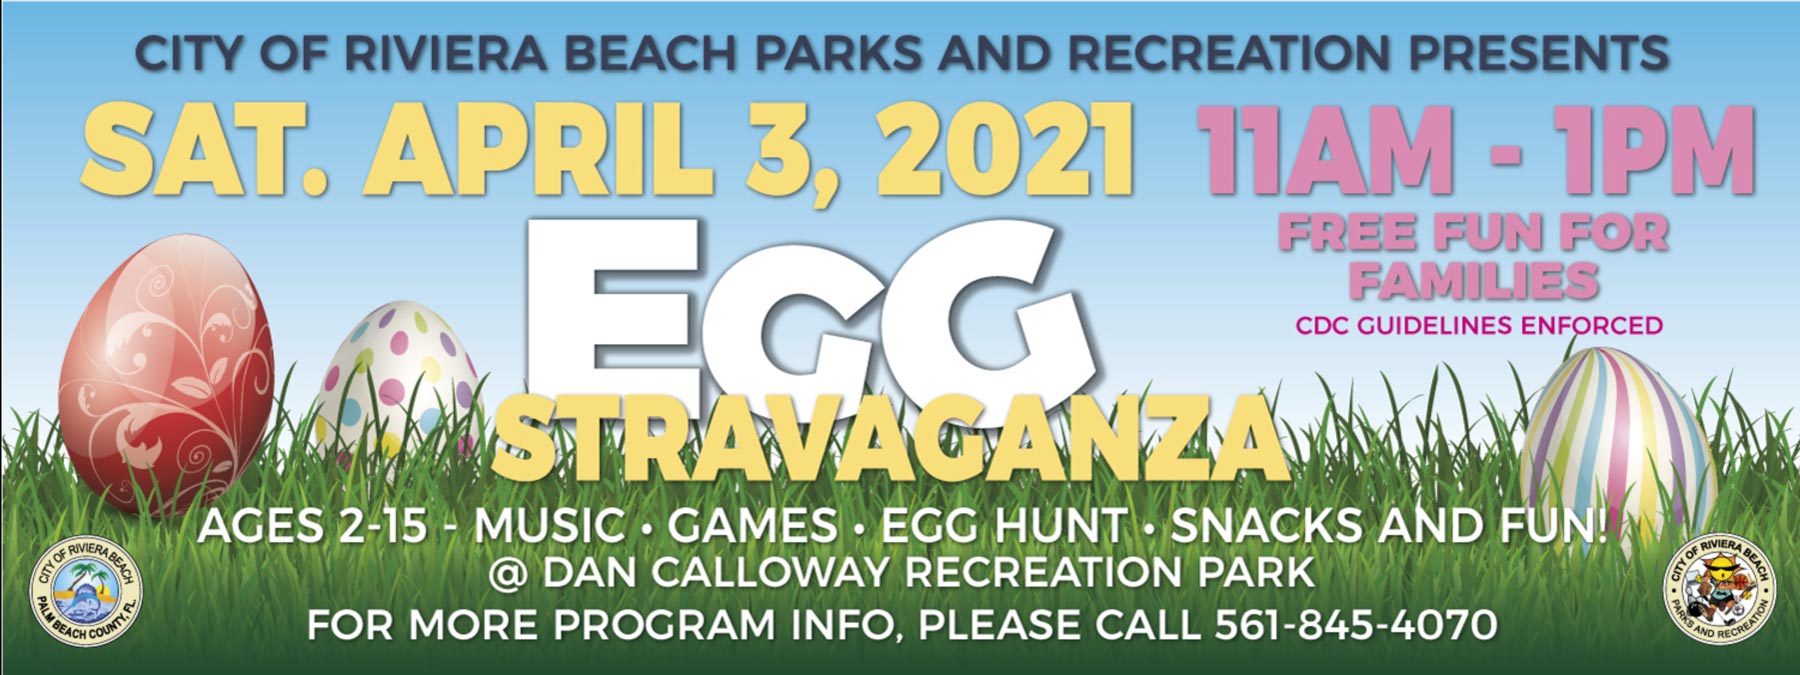 Egg Stravaganza Saturday April 3rd at 11 Am to 1 Pm any question contact Parks at 561-845-4070